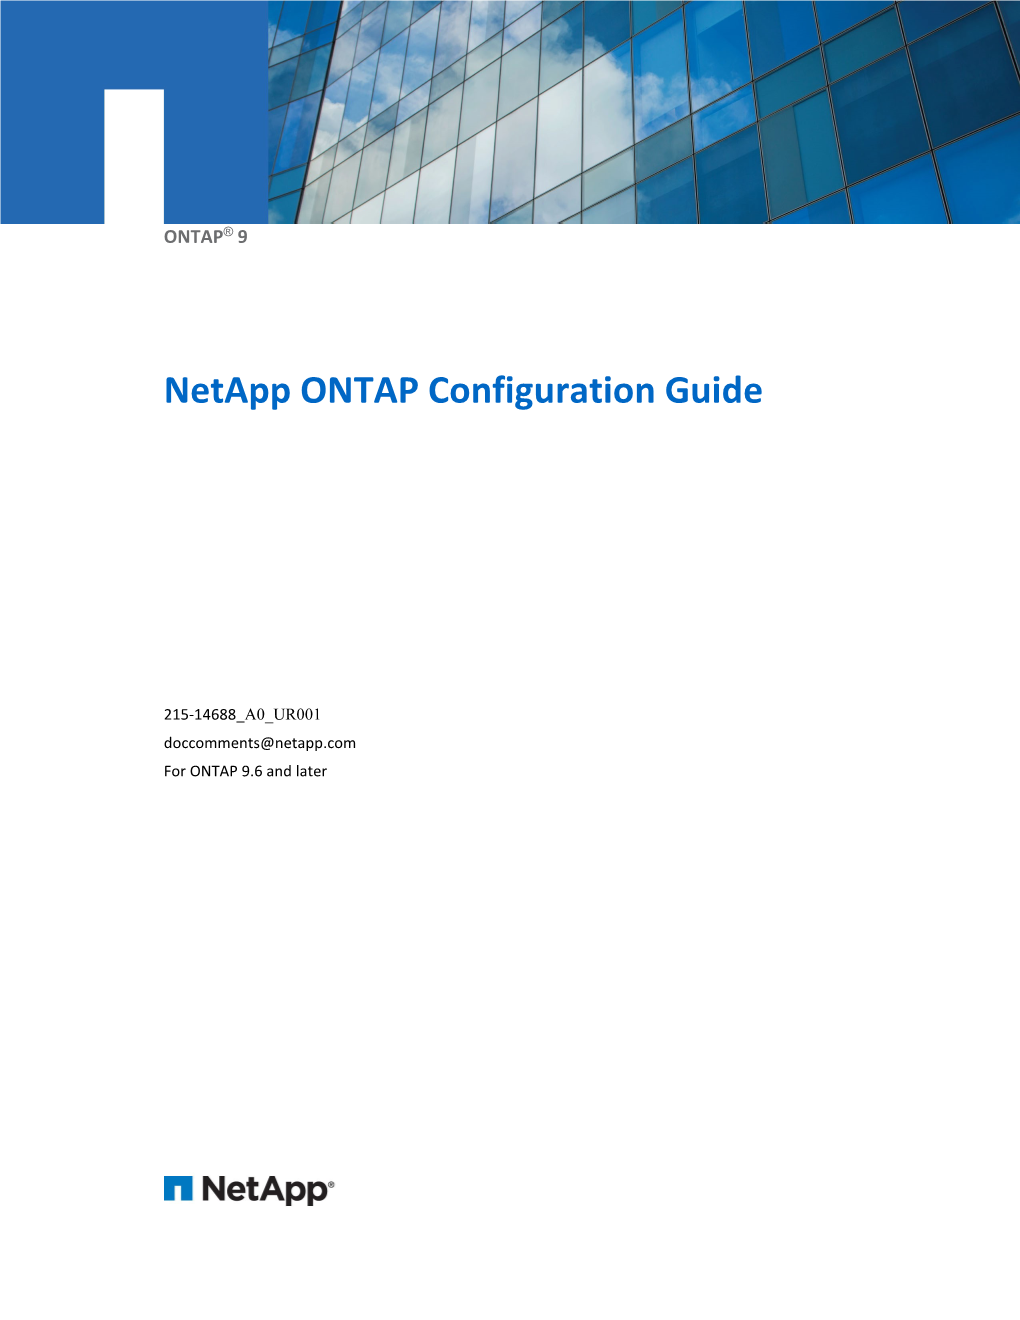 ONTAP 9 Software Setup Guide